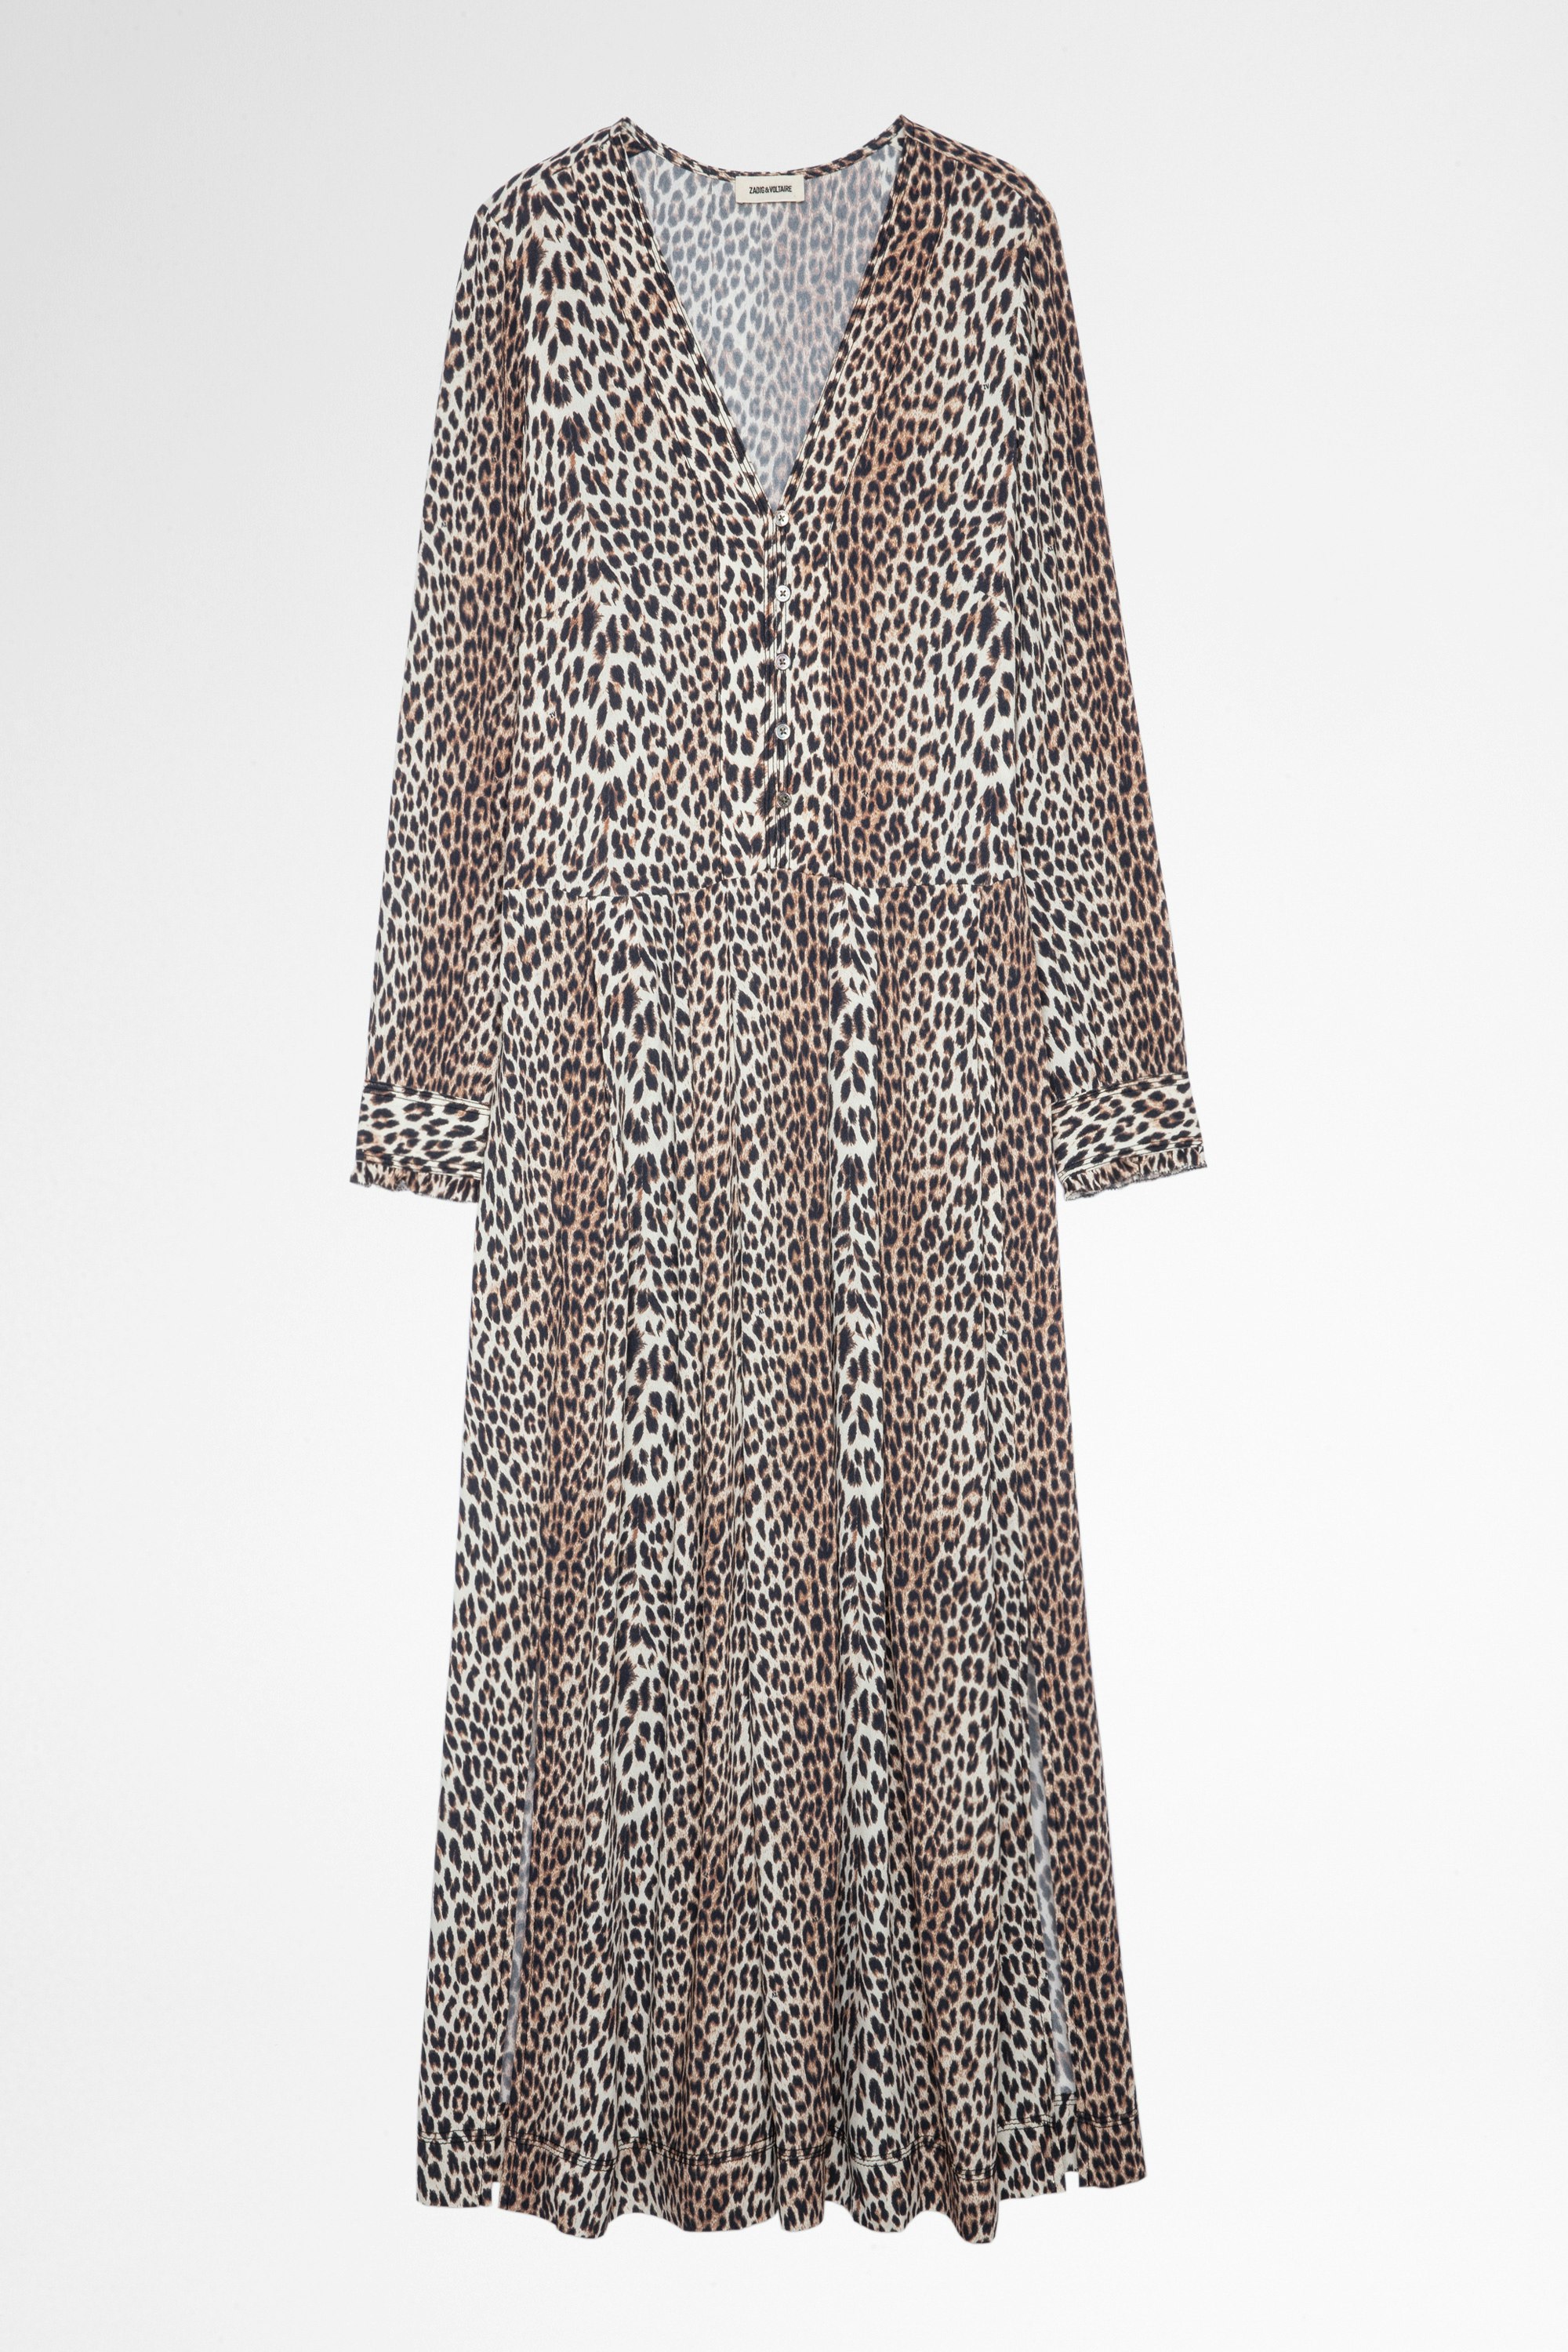 Kleid Roux Leopard Langes Kleid mit Leopardendruck